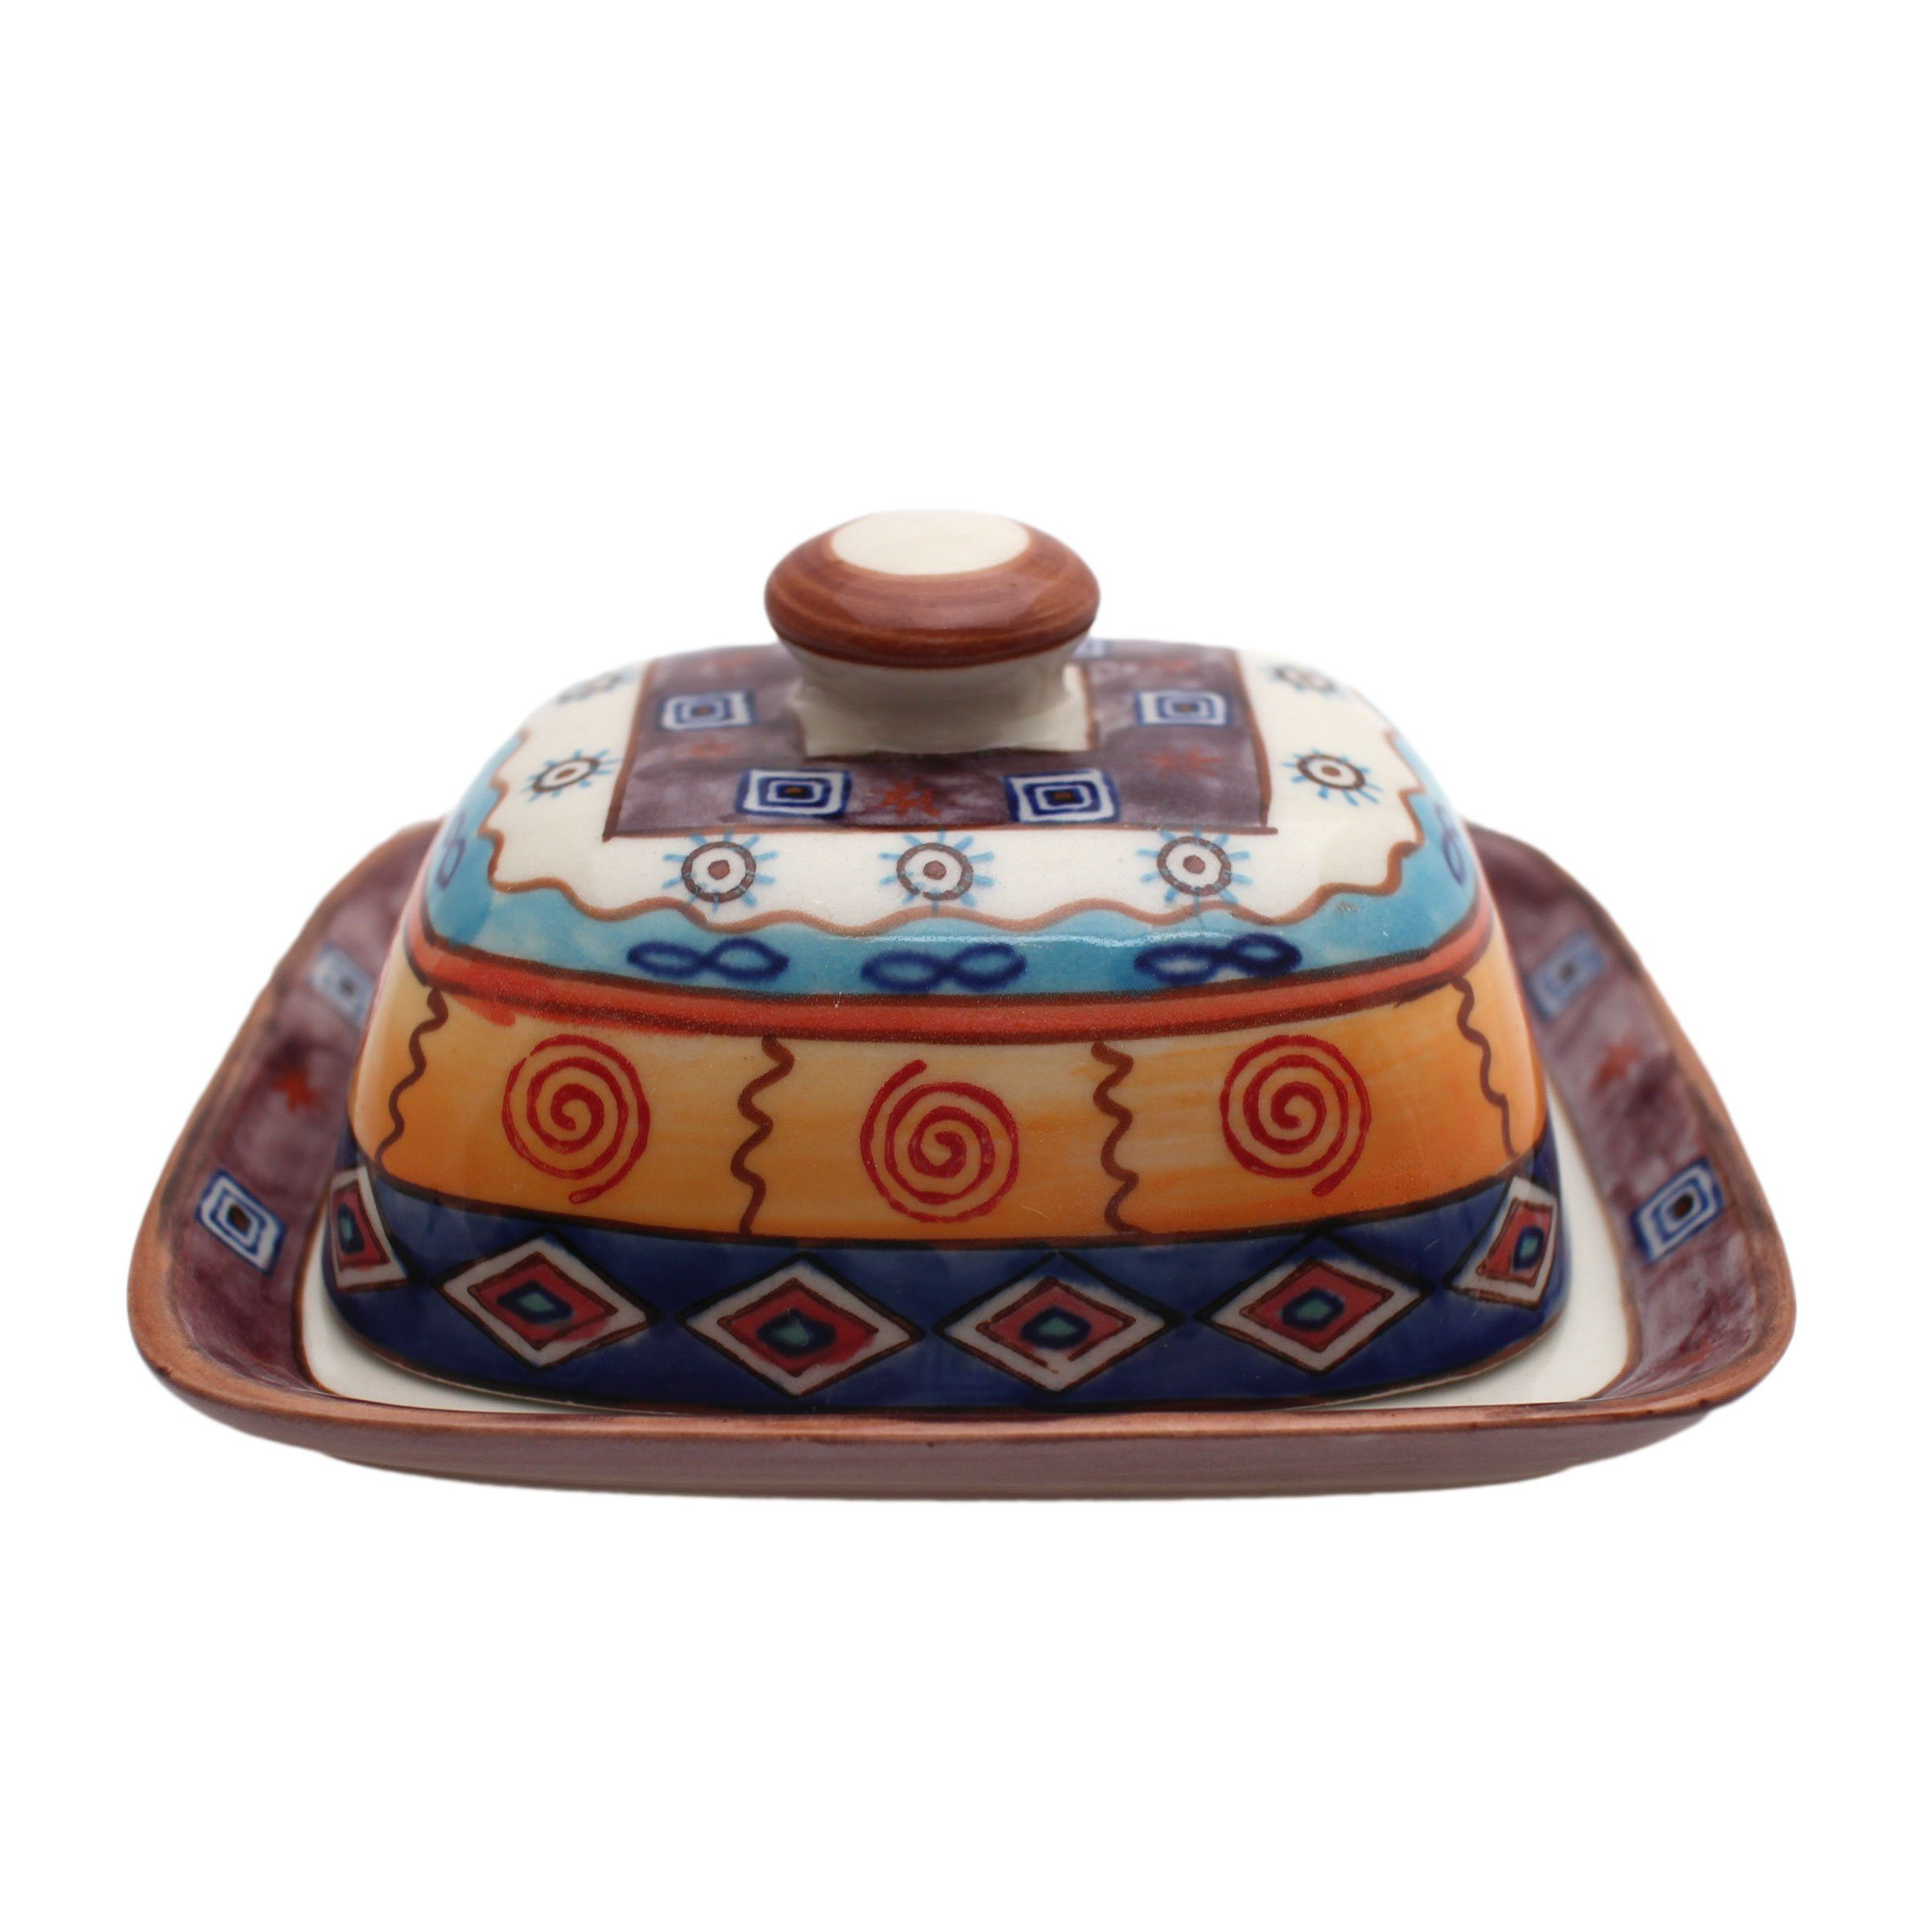 Butterdose Butterdose Indian aus handbemalter Gall&Zick Keramik